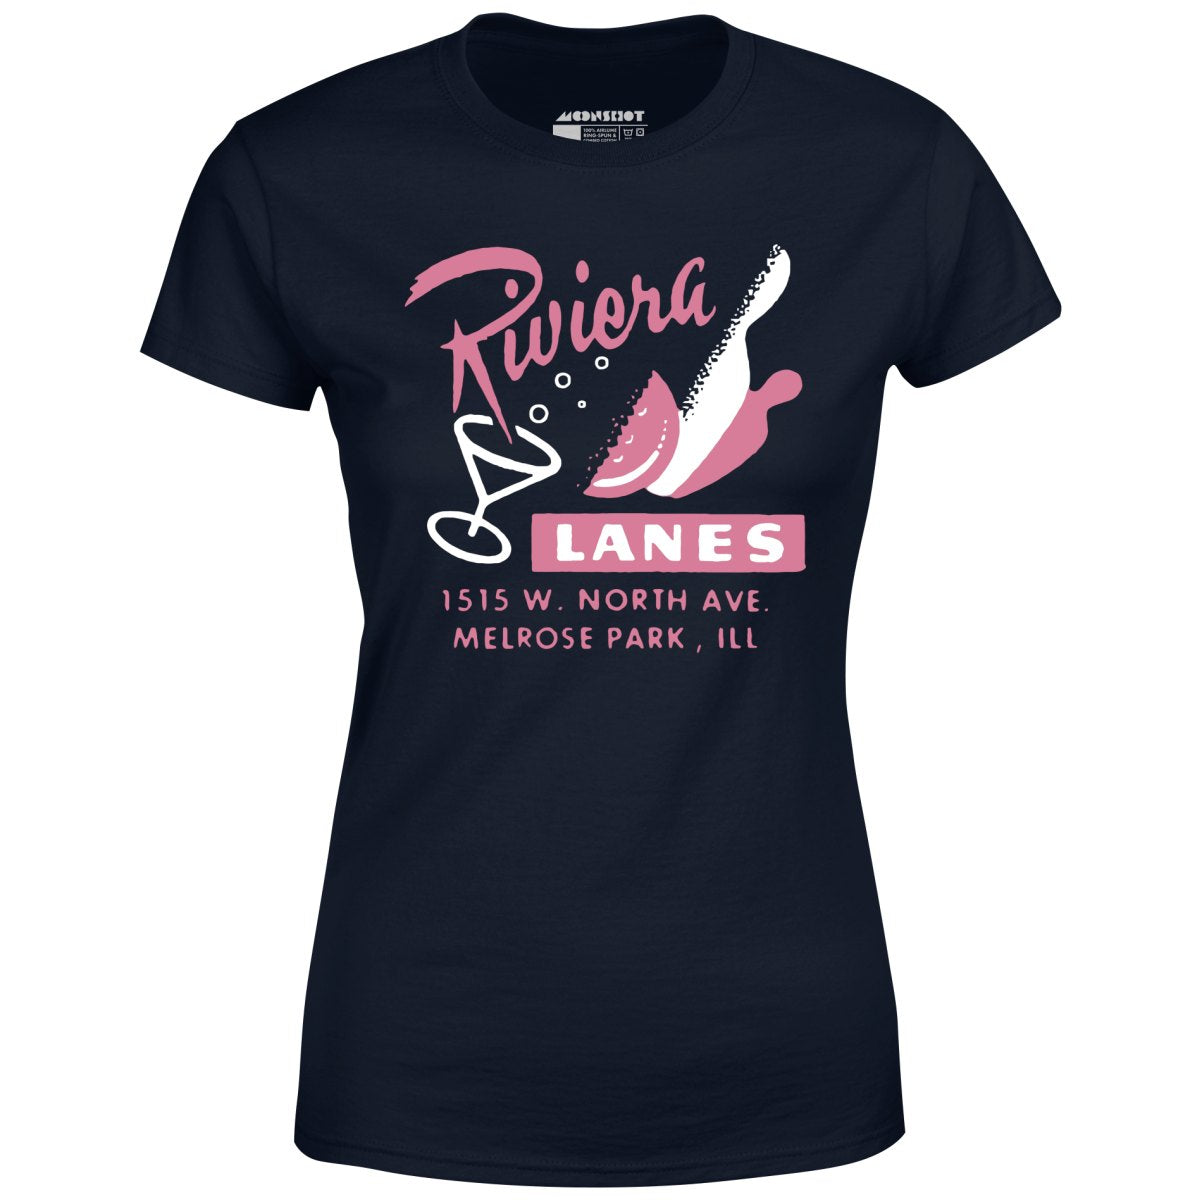 Riviera Lanes - Melrose Park, IL - Vintage Bowling Alley - Women's T-Shirt